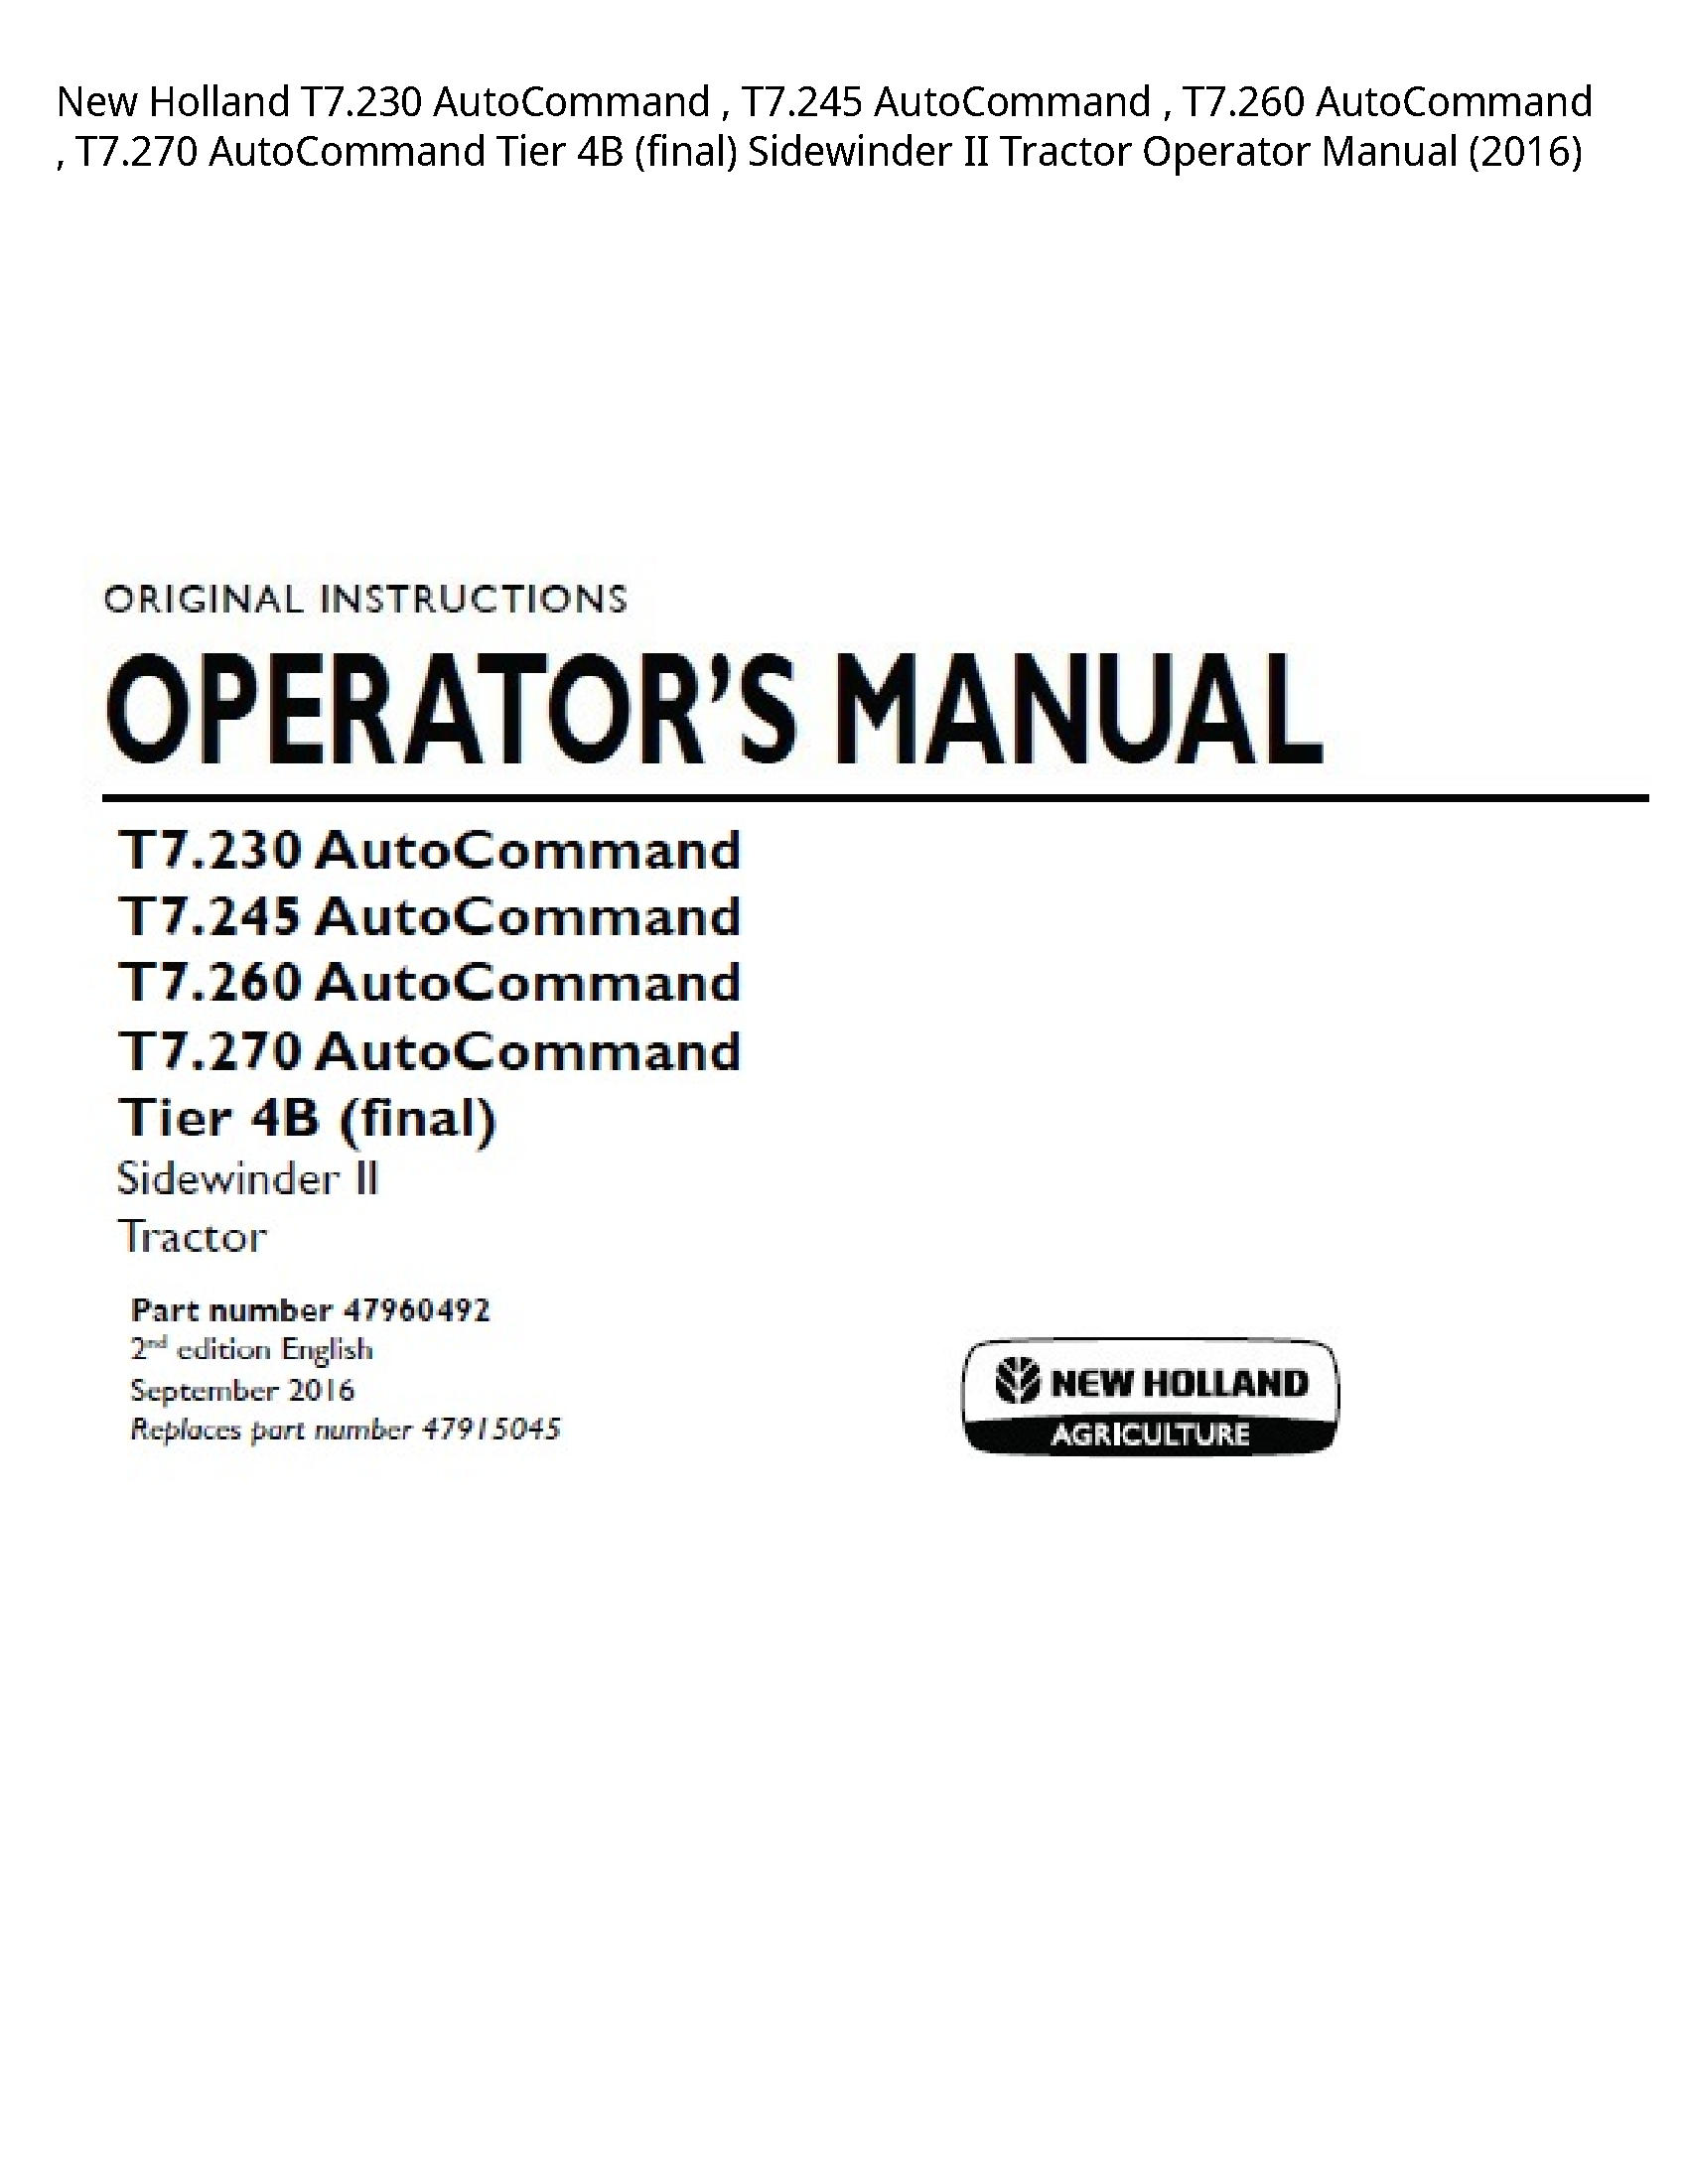 New Holland T7.230 AutoCommand AutoCommand AutoCommand AutoCommand Tier (final) Sidewinder II Tractor Operator manual